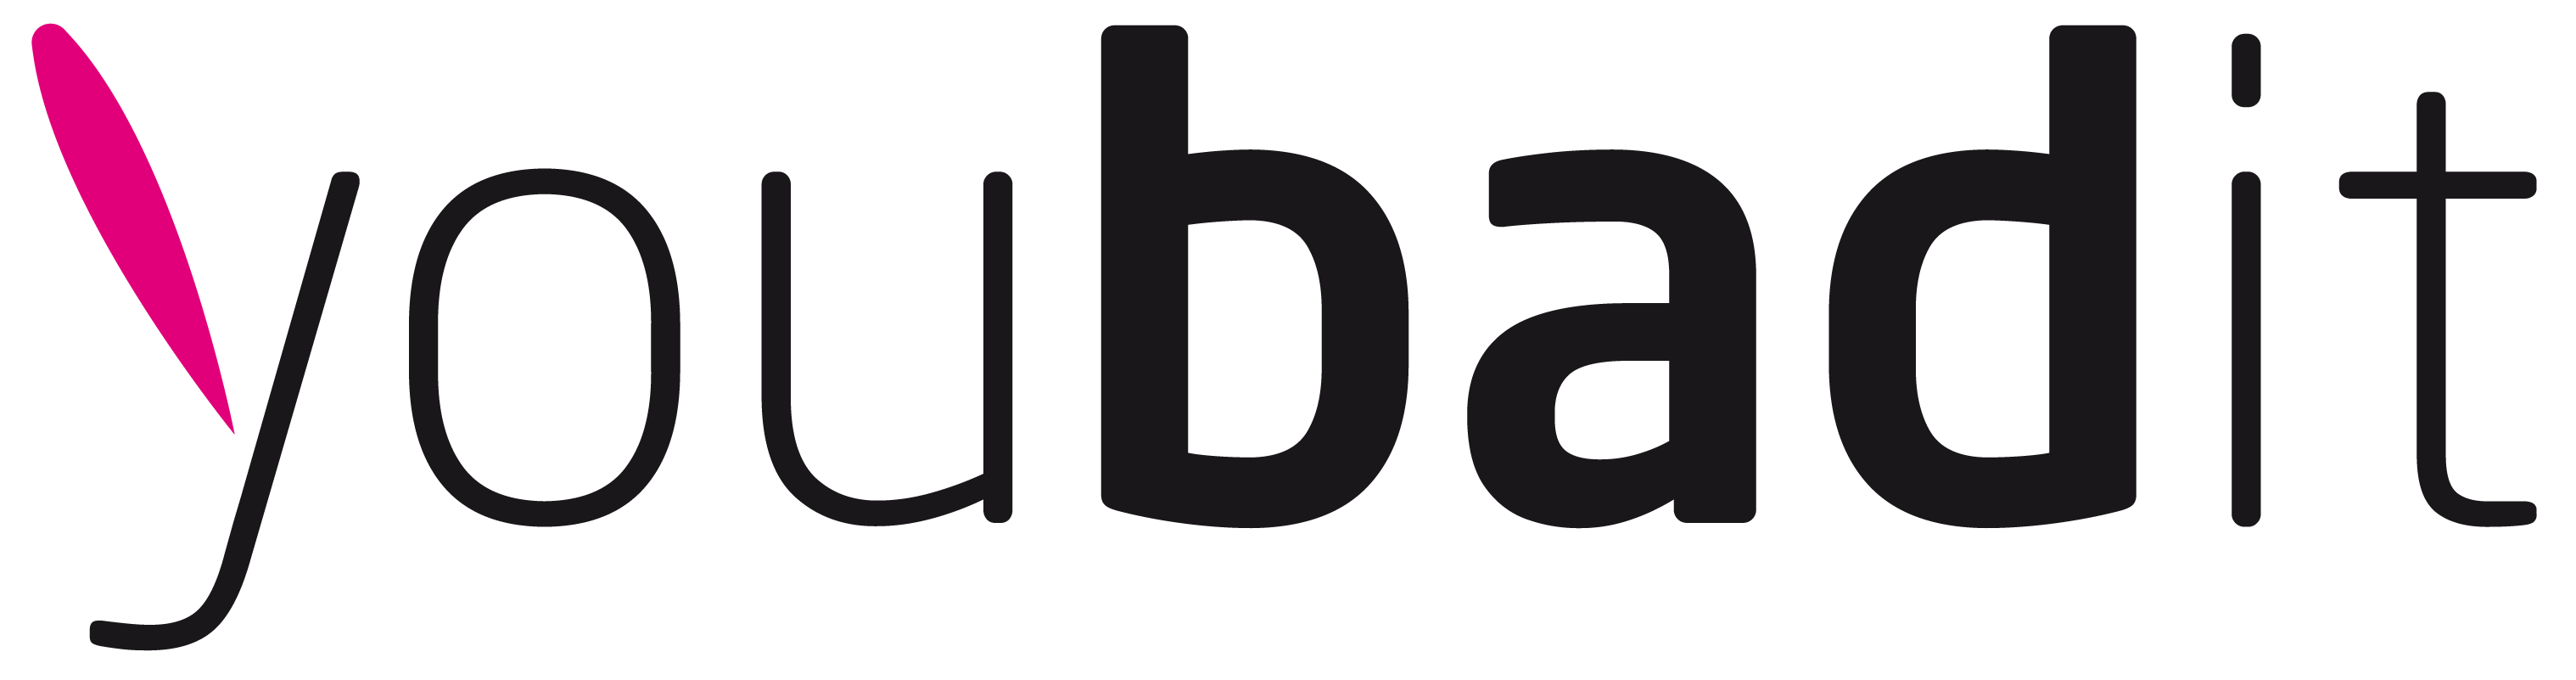 youbadit-logo.png (49 KB)